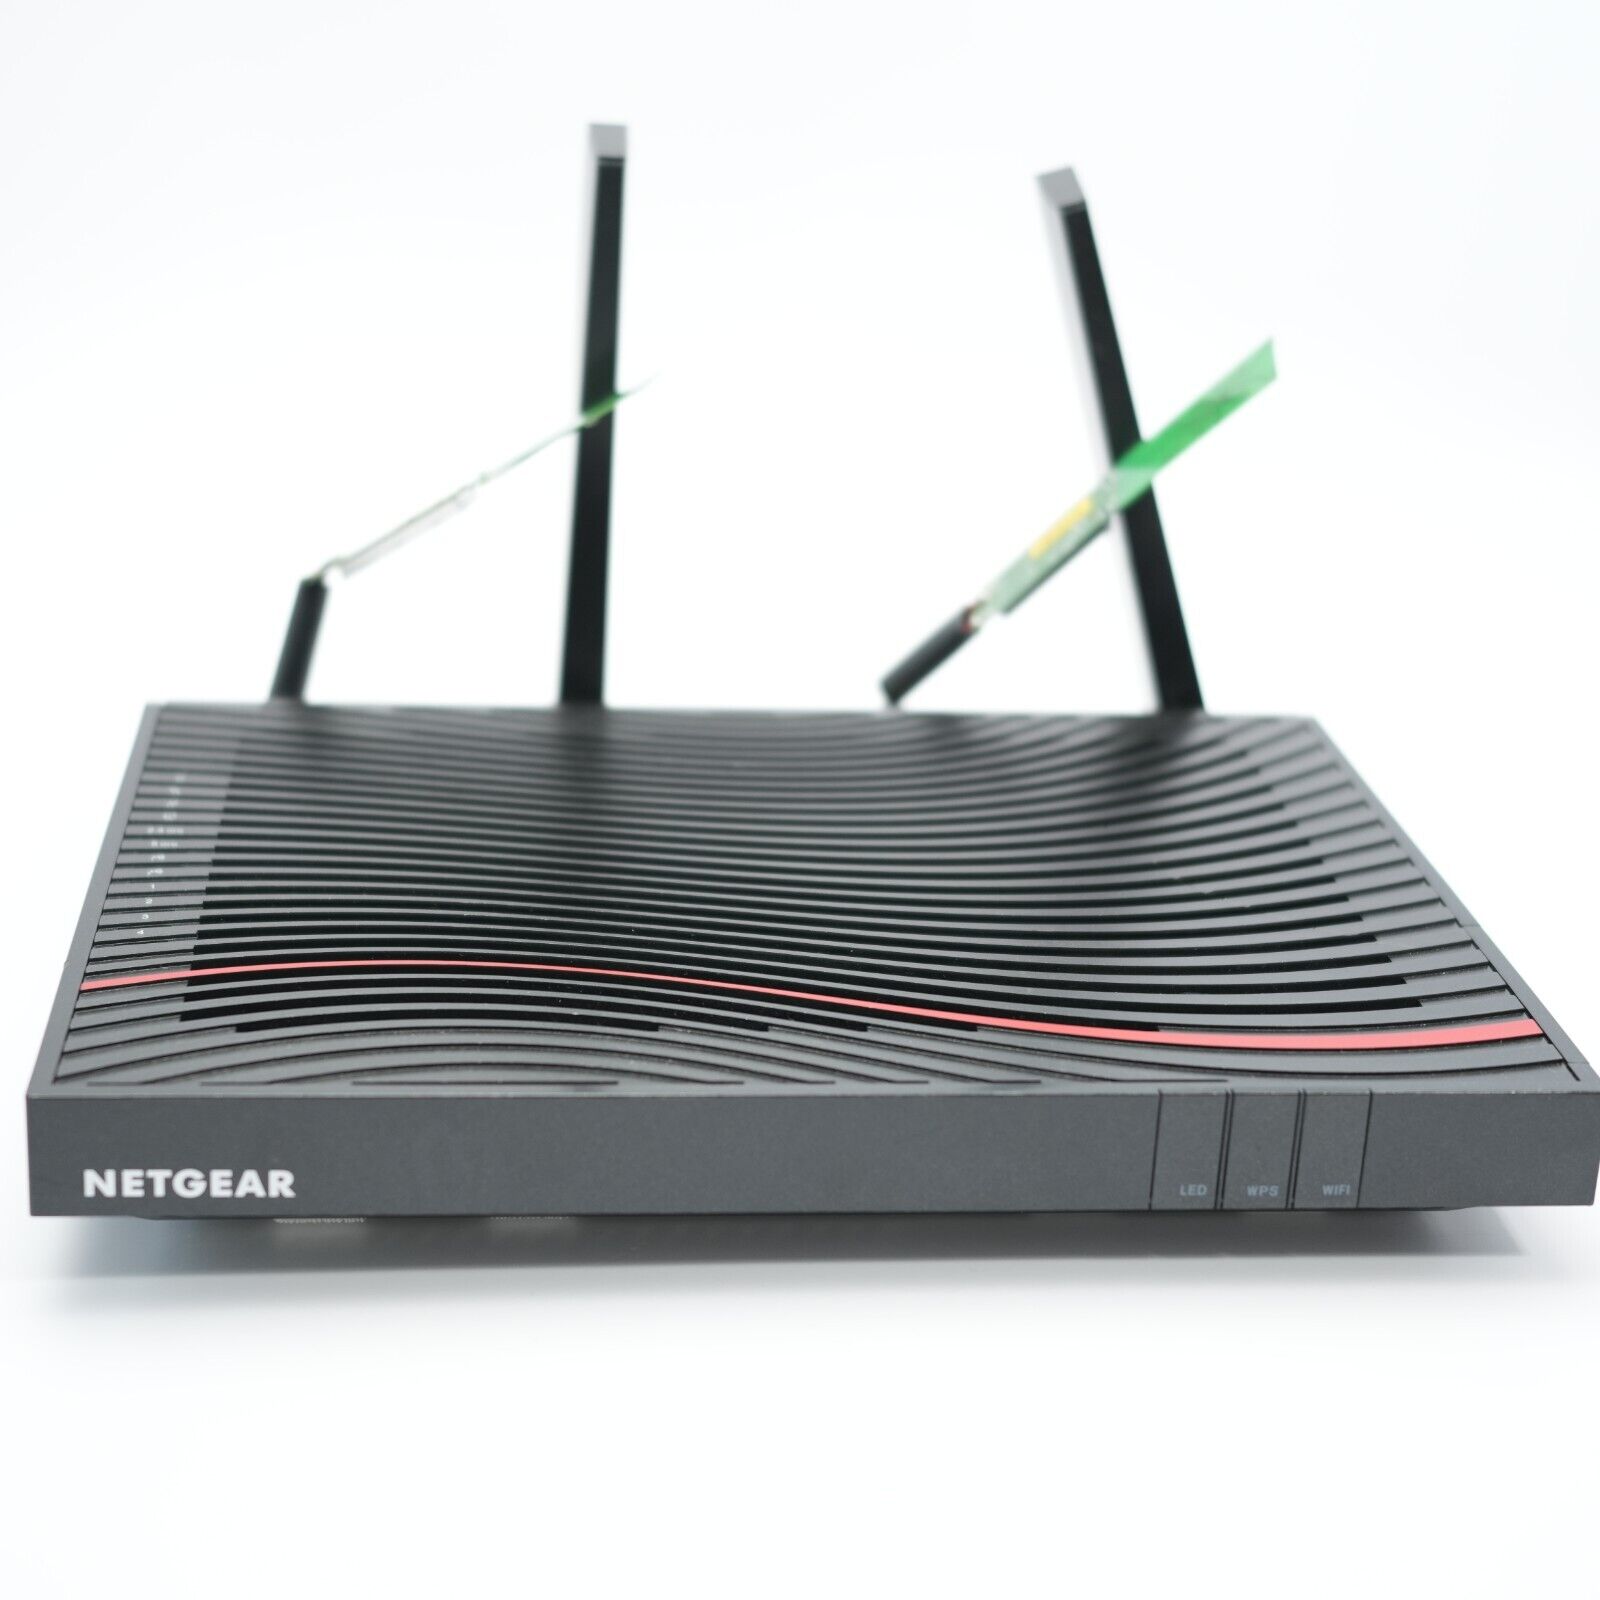 Netgear C7800 Nighthawk X4S AC3200 WiFi Cable Modem Router NO POWER CORD